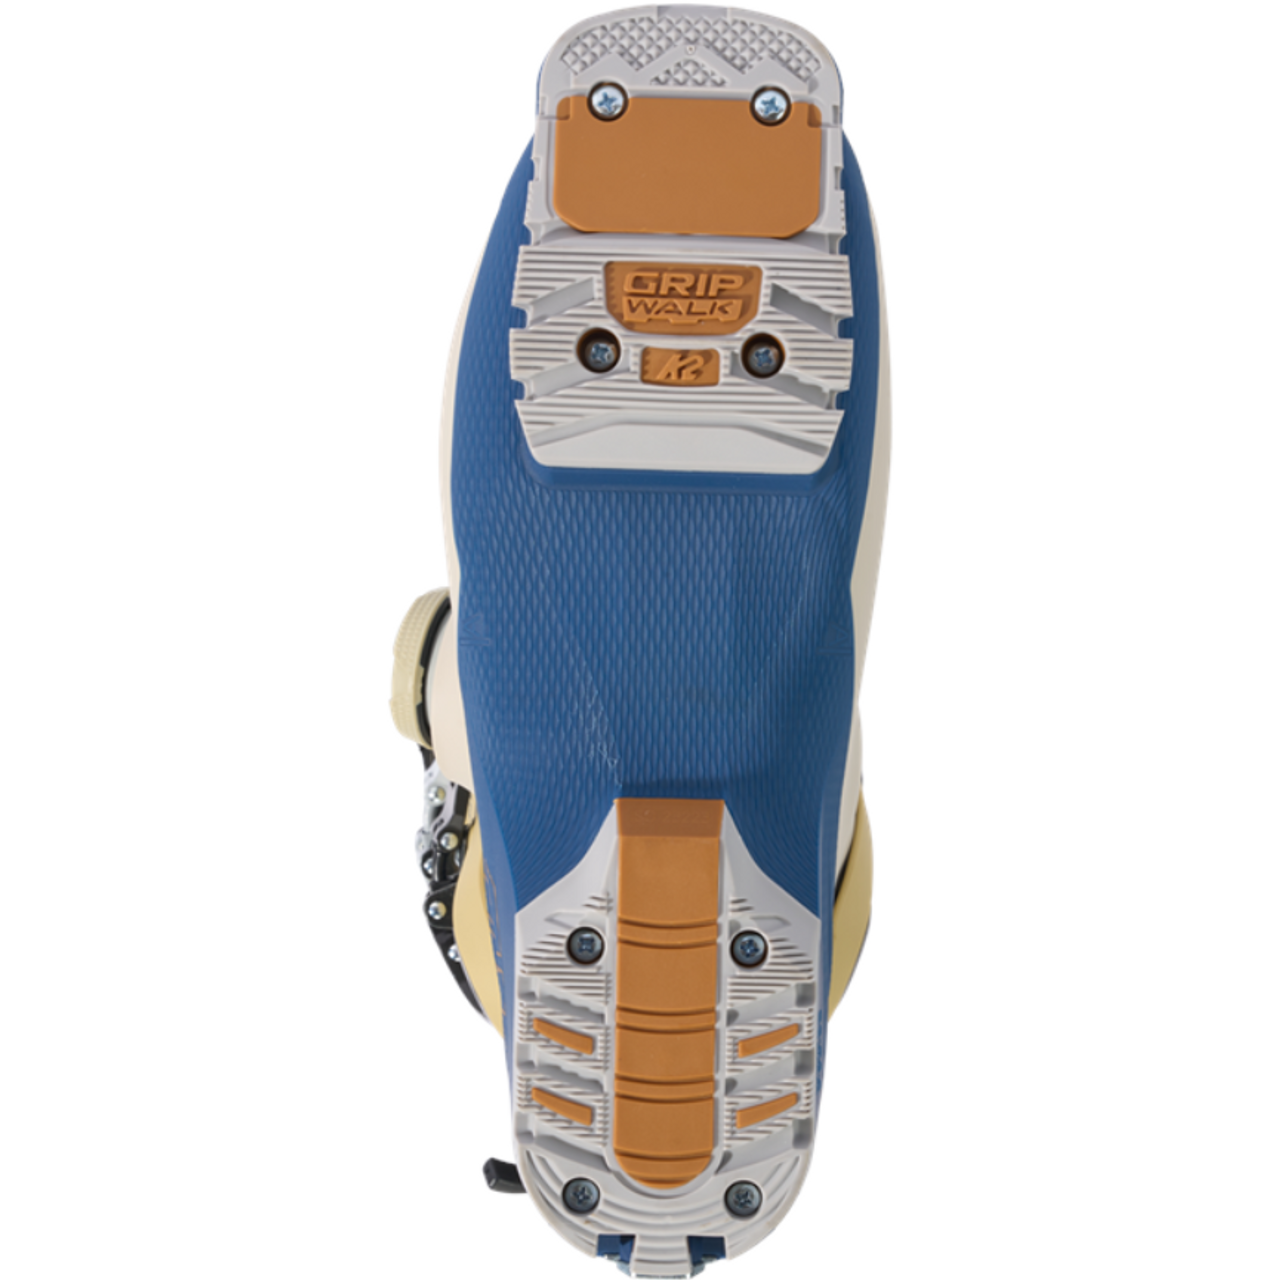 K2 Mindbender 120 BOA Ski Boots 2024